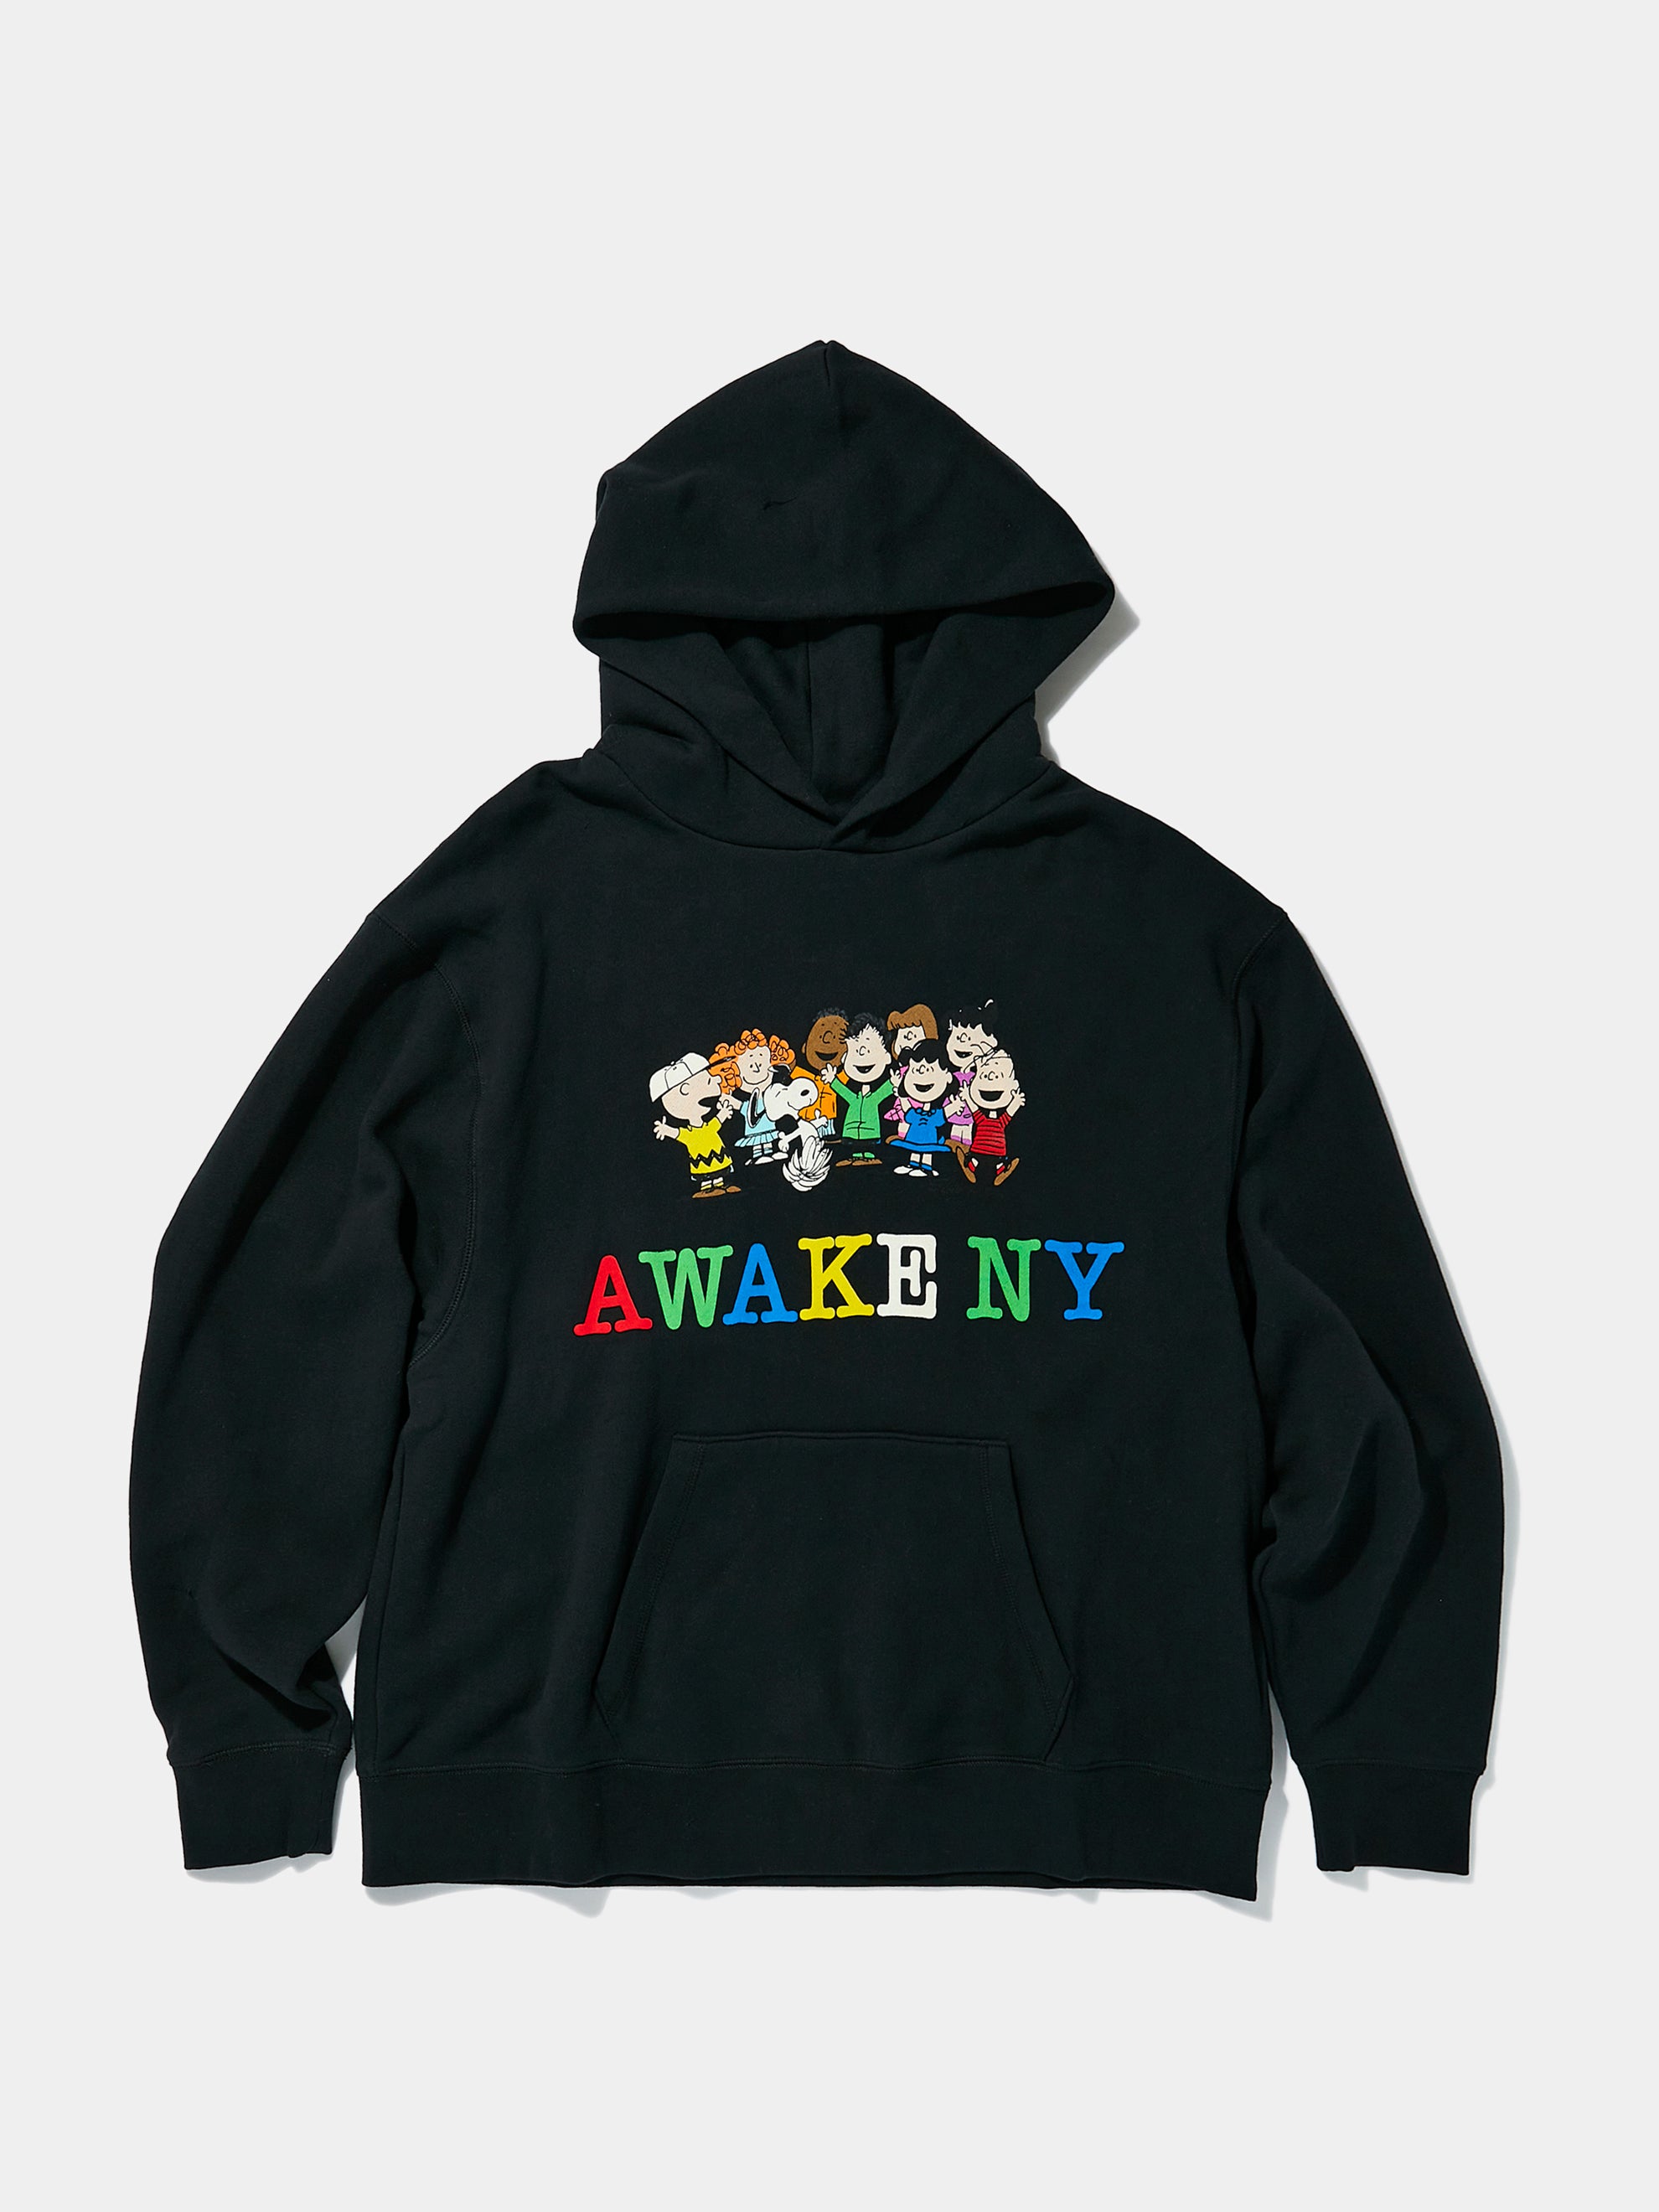 Buy Awake Ny AWAKE NY X PEANUTS Printed Hoodie Online at UNION LOS